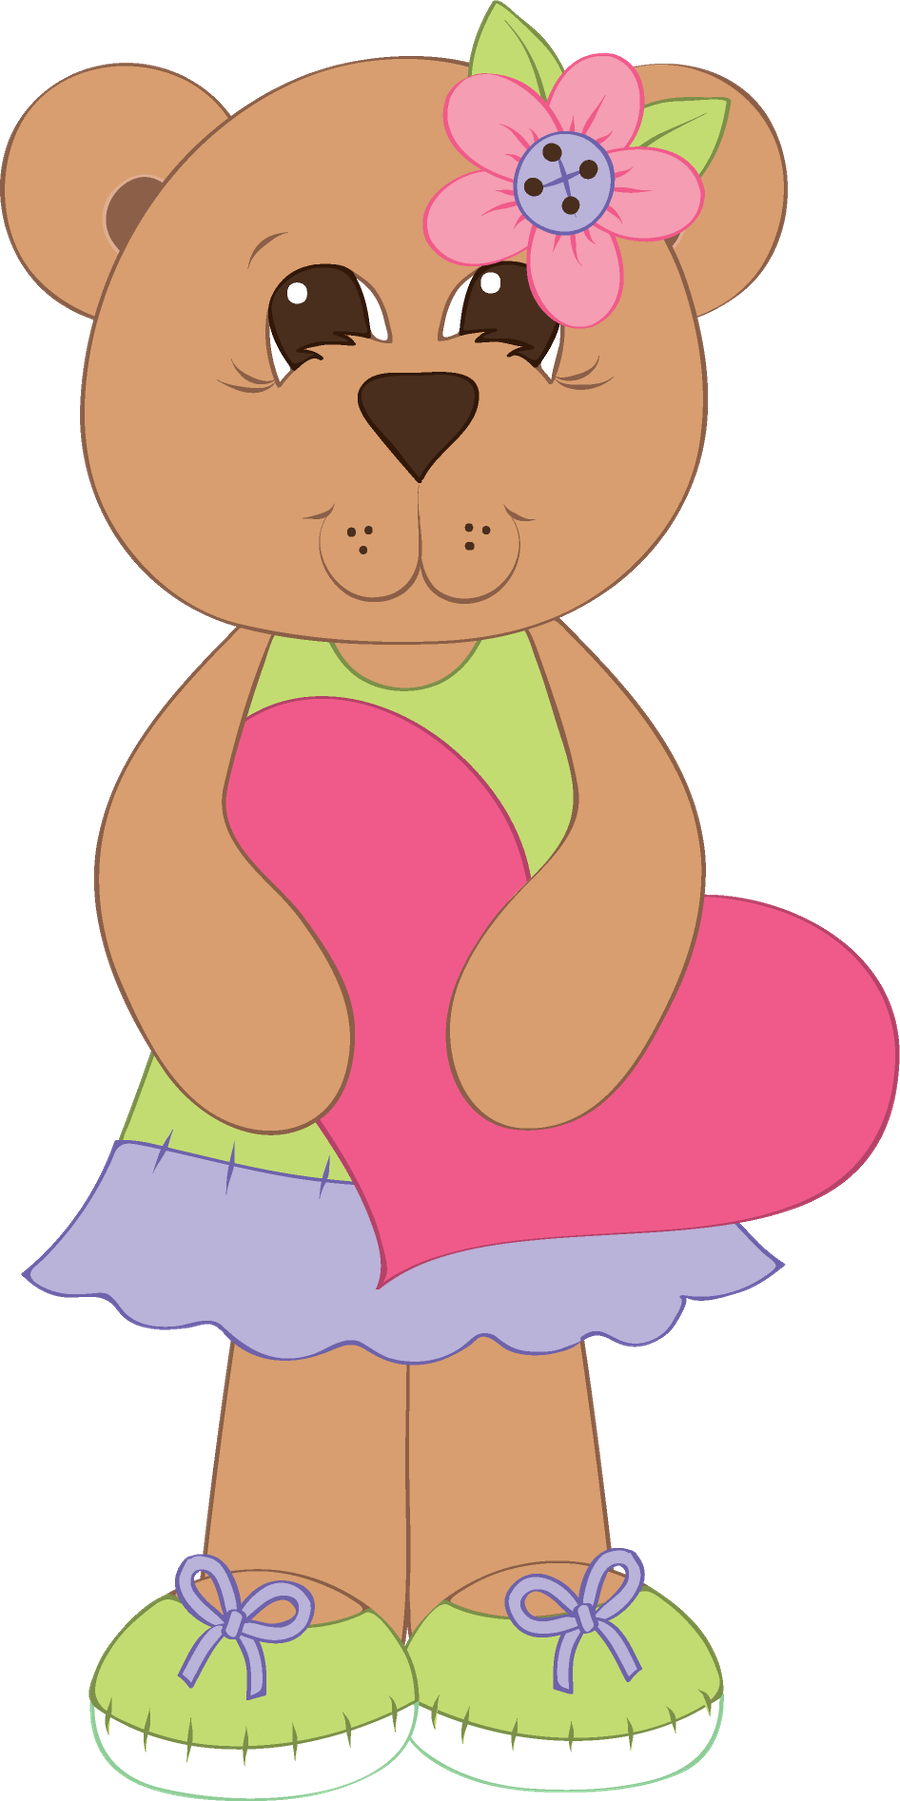 Bear In Green Dress & Shoes Holding A Pink Heart - Teddy Bear (900x1801)